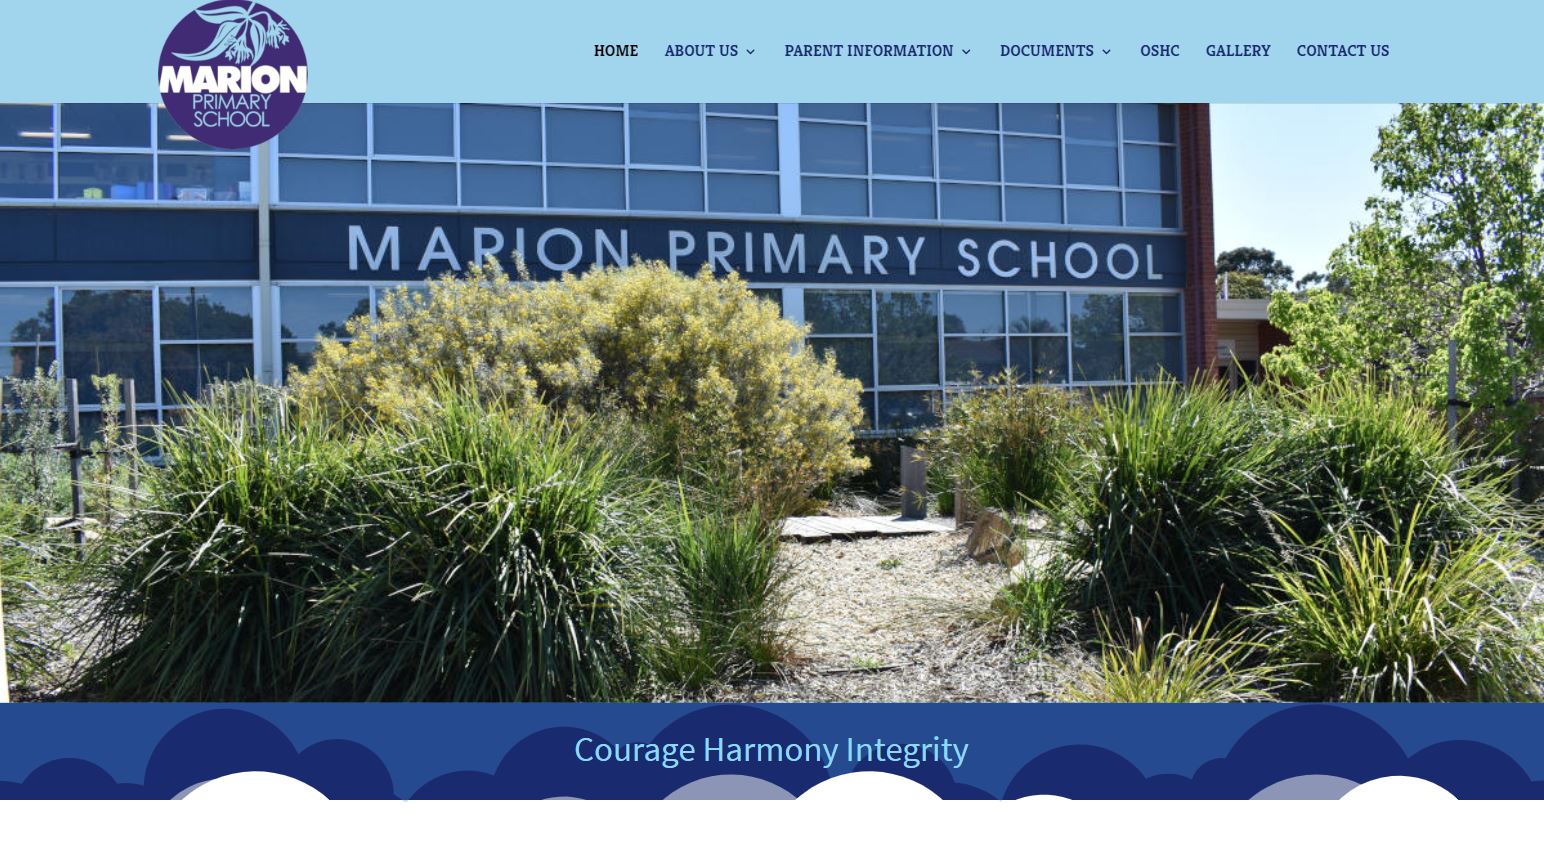 Marion Primary School frontage